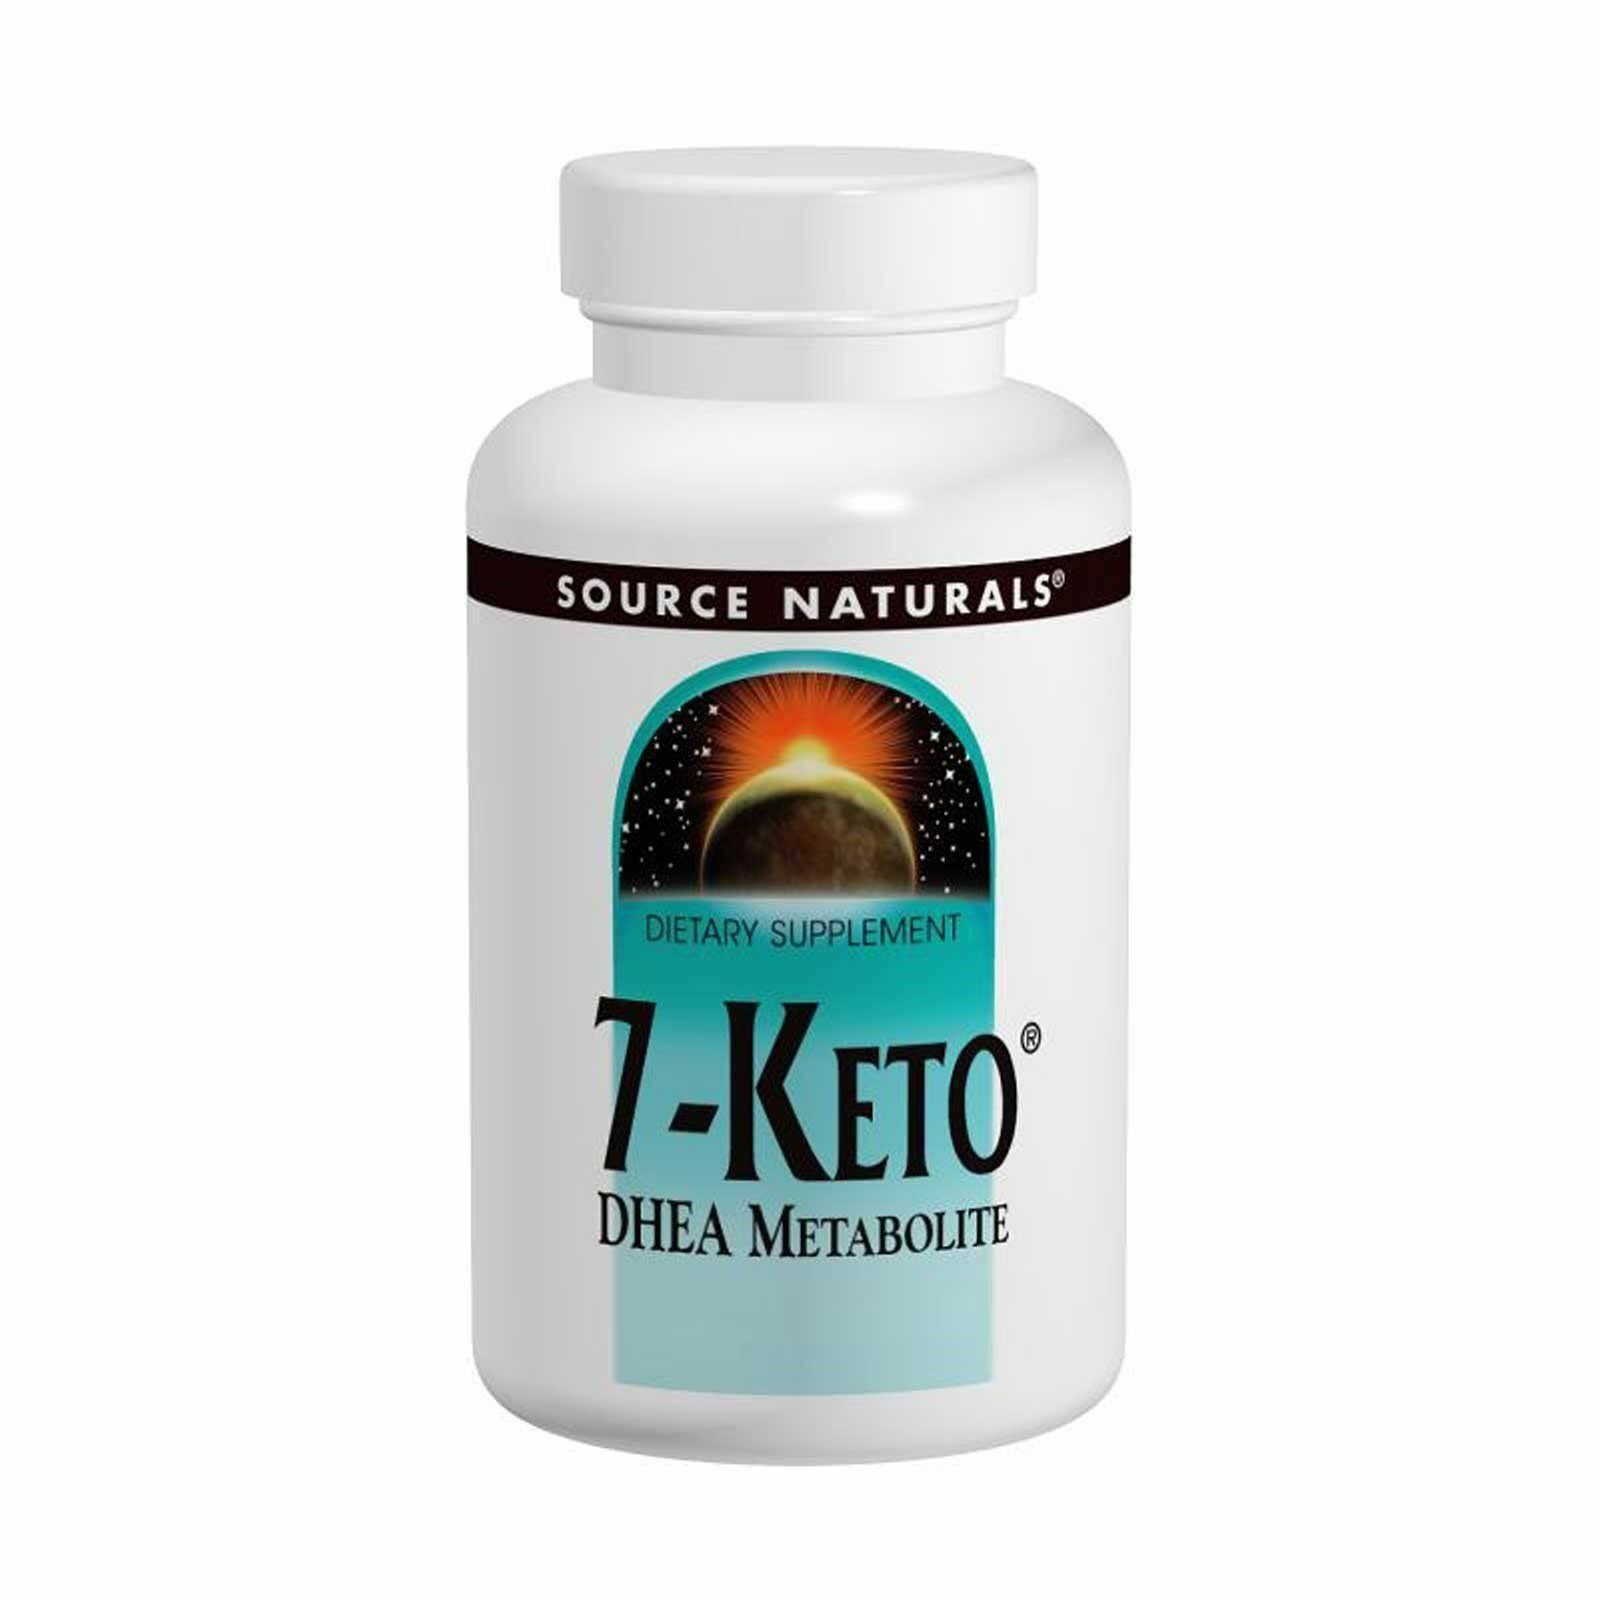 Source Naturals 7-Keto DHEA Metabolite - 50mg, 60 ct